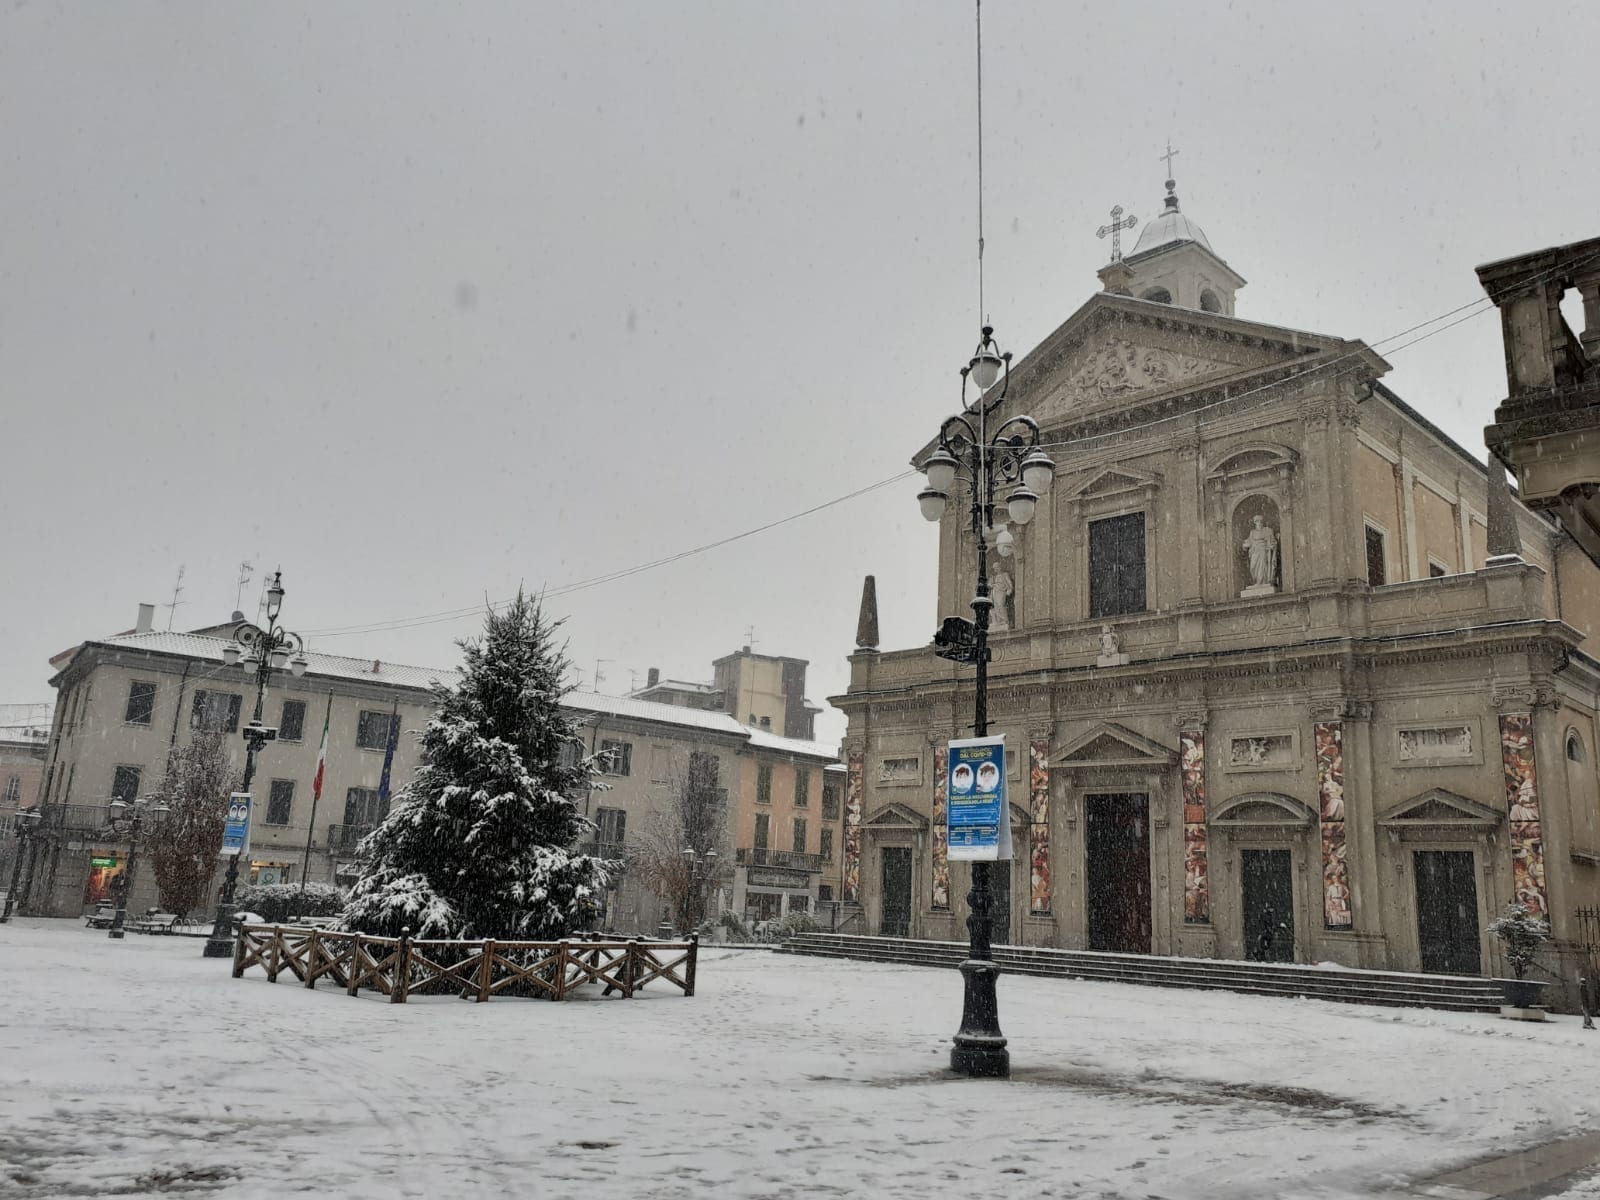 Meteo: freddo e neve su Saronno, Groane e Tradate. Già stasera